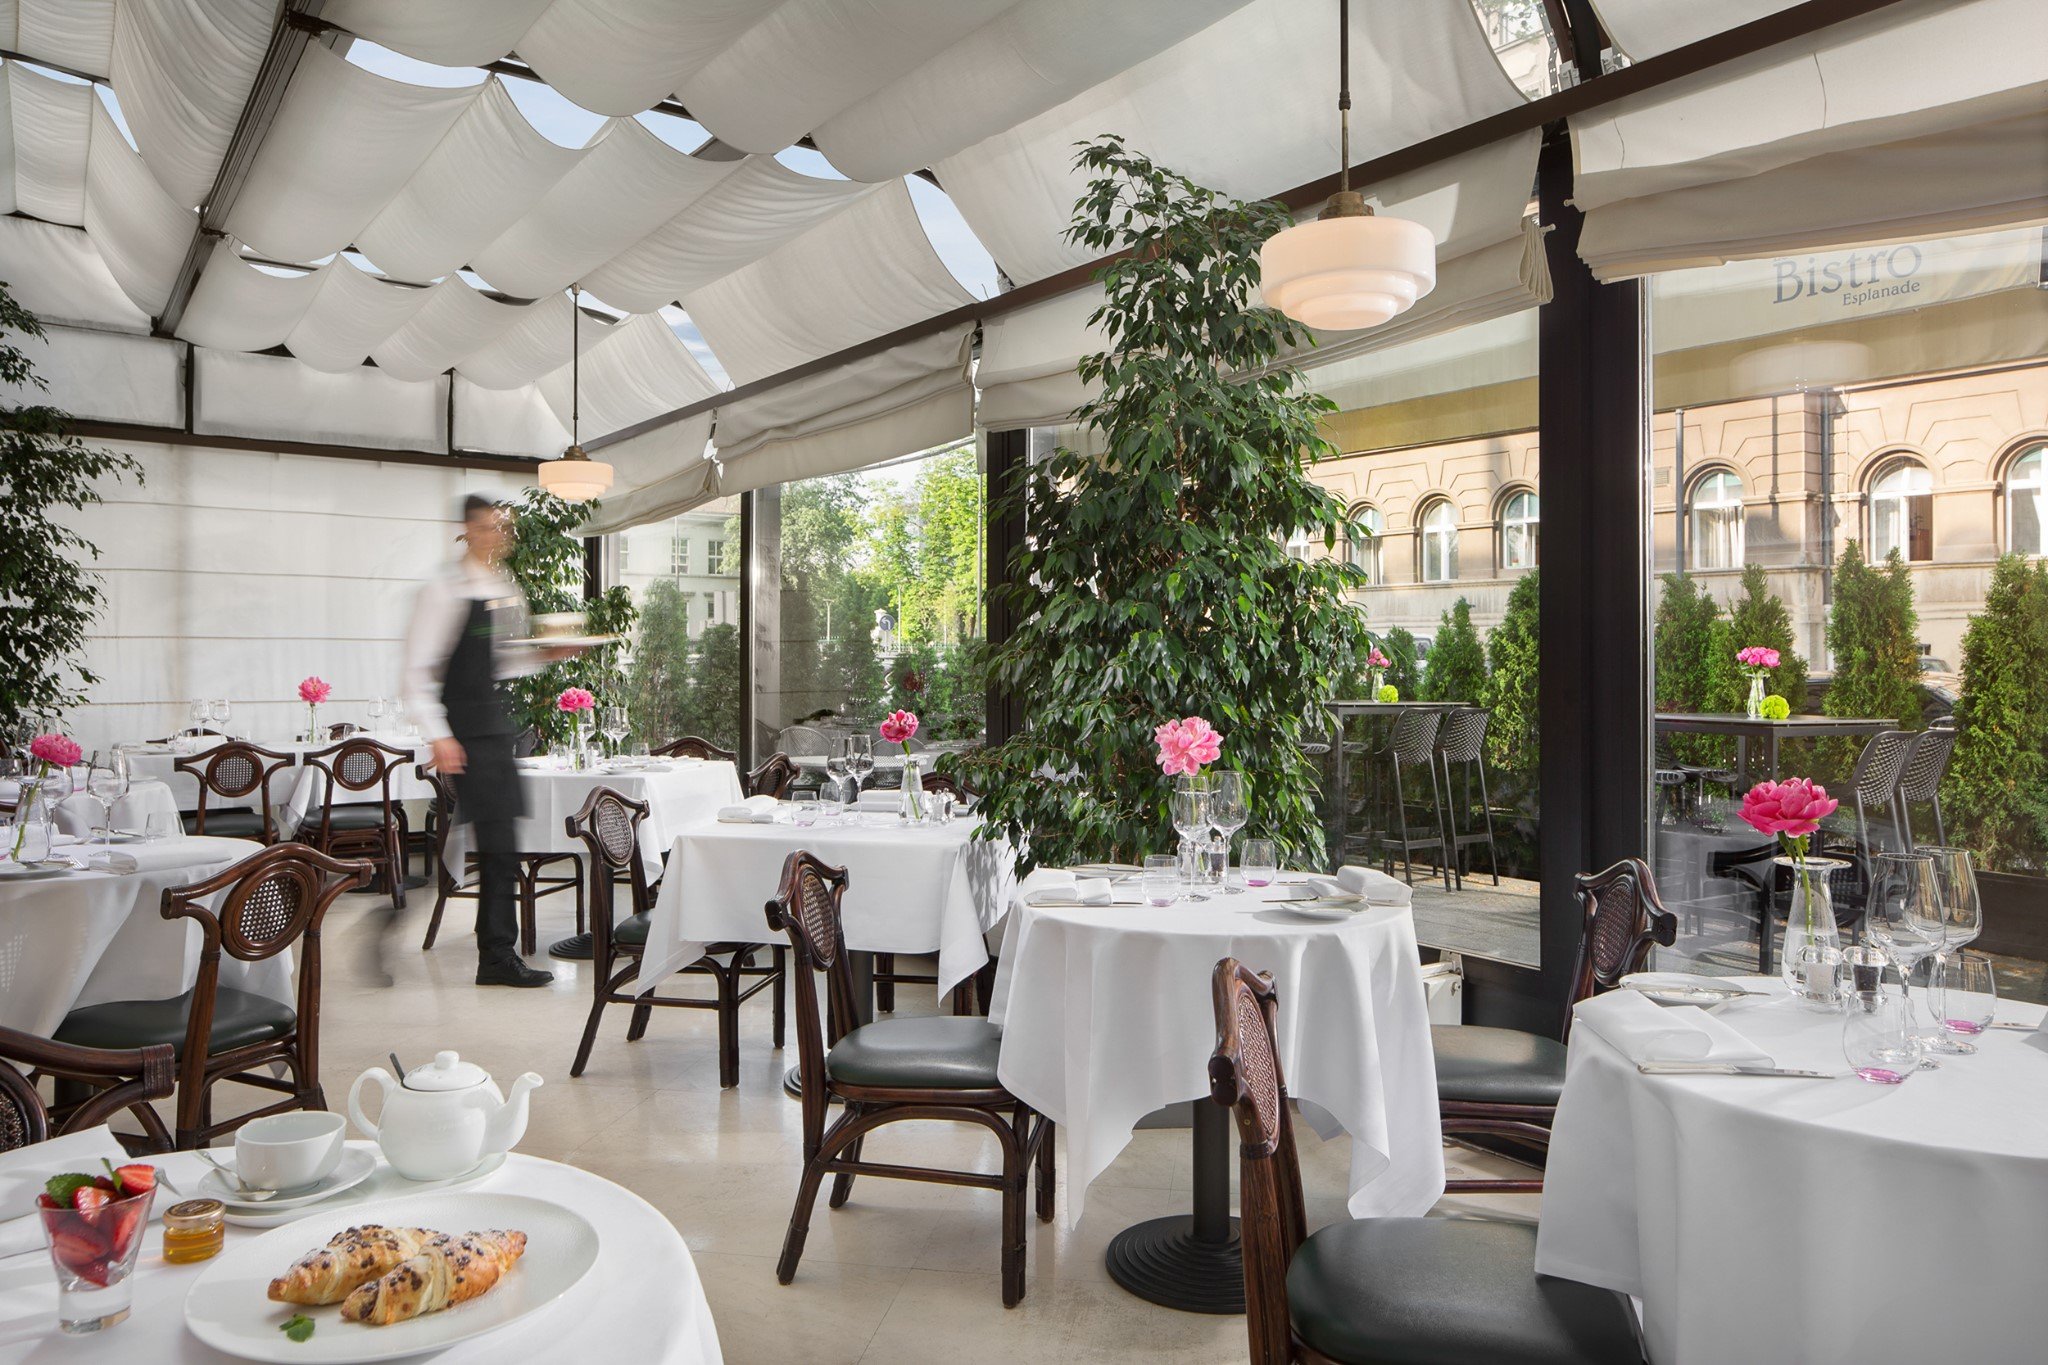 Le Bistro Esplanade - most instagrammable restaurants in Zagreb